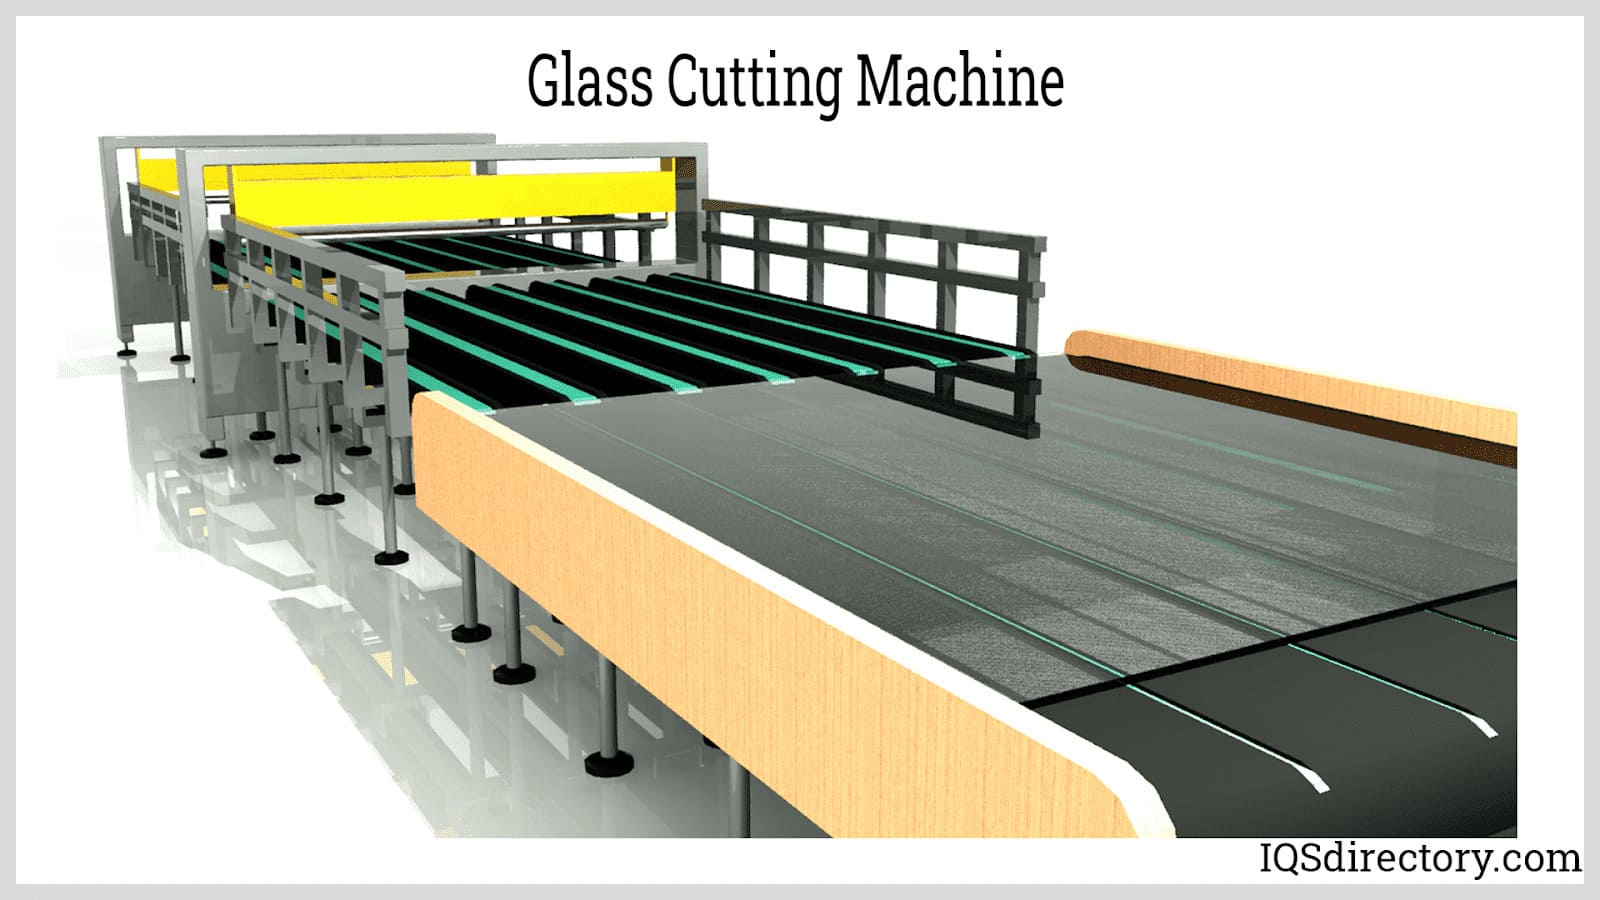 Glass Cutting Tool, Heavy Duty Diamond Glass Cutter For Cutting